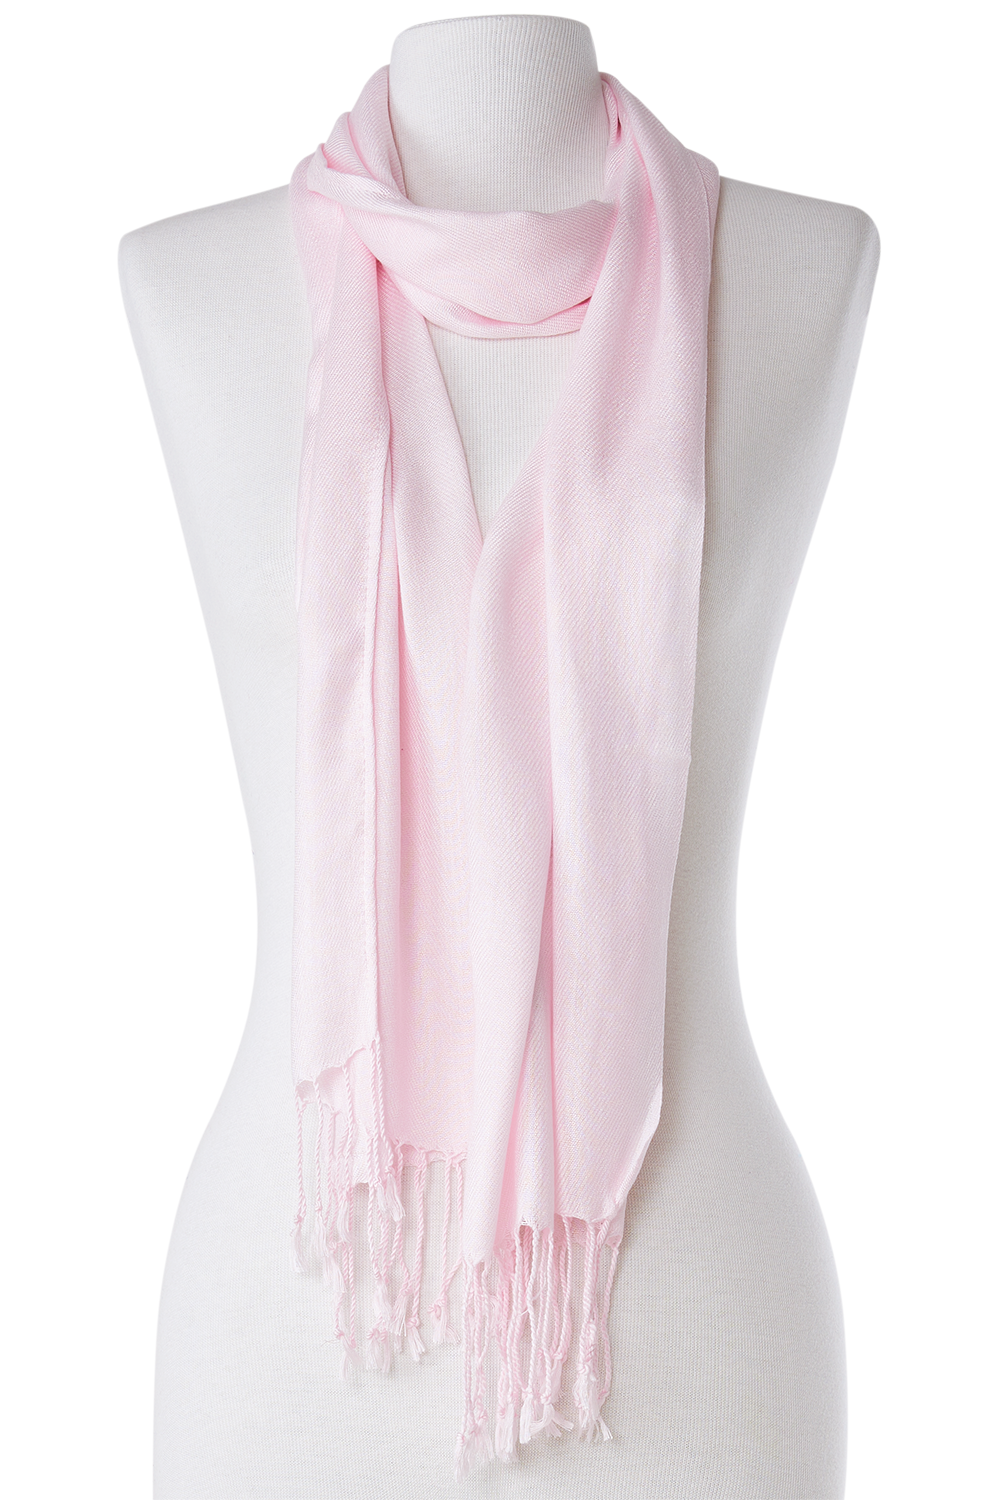 pashmina cachecol de viscose rosa claro 35x180cm 